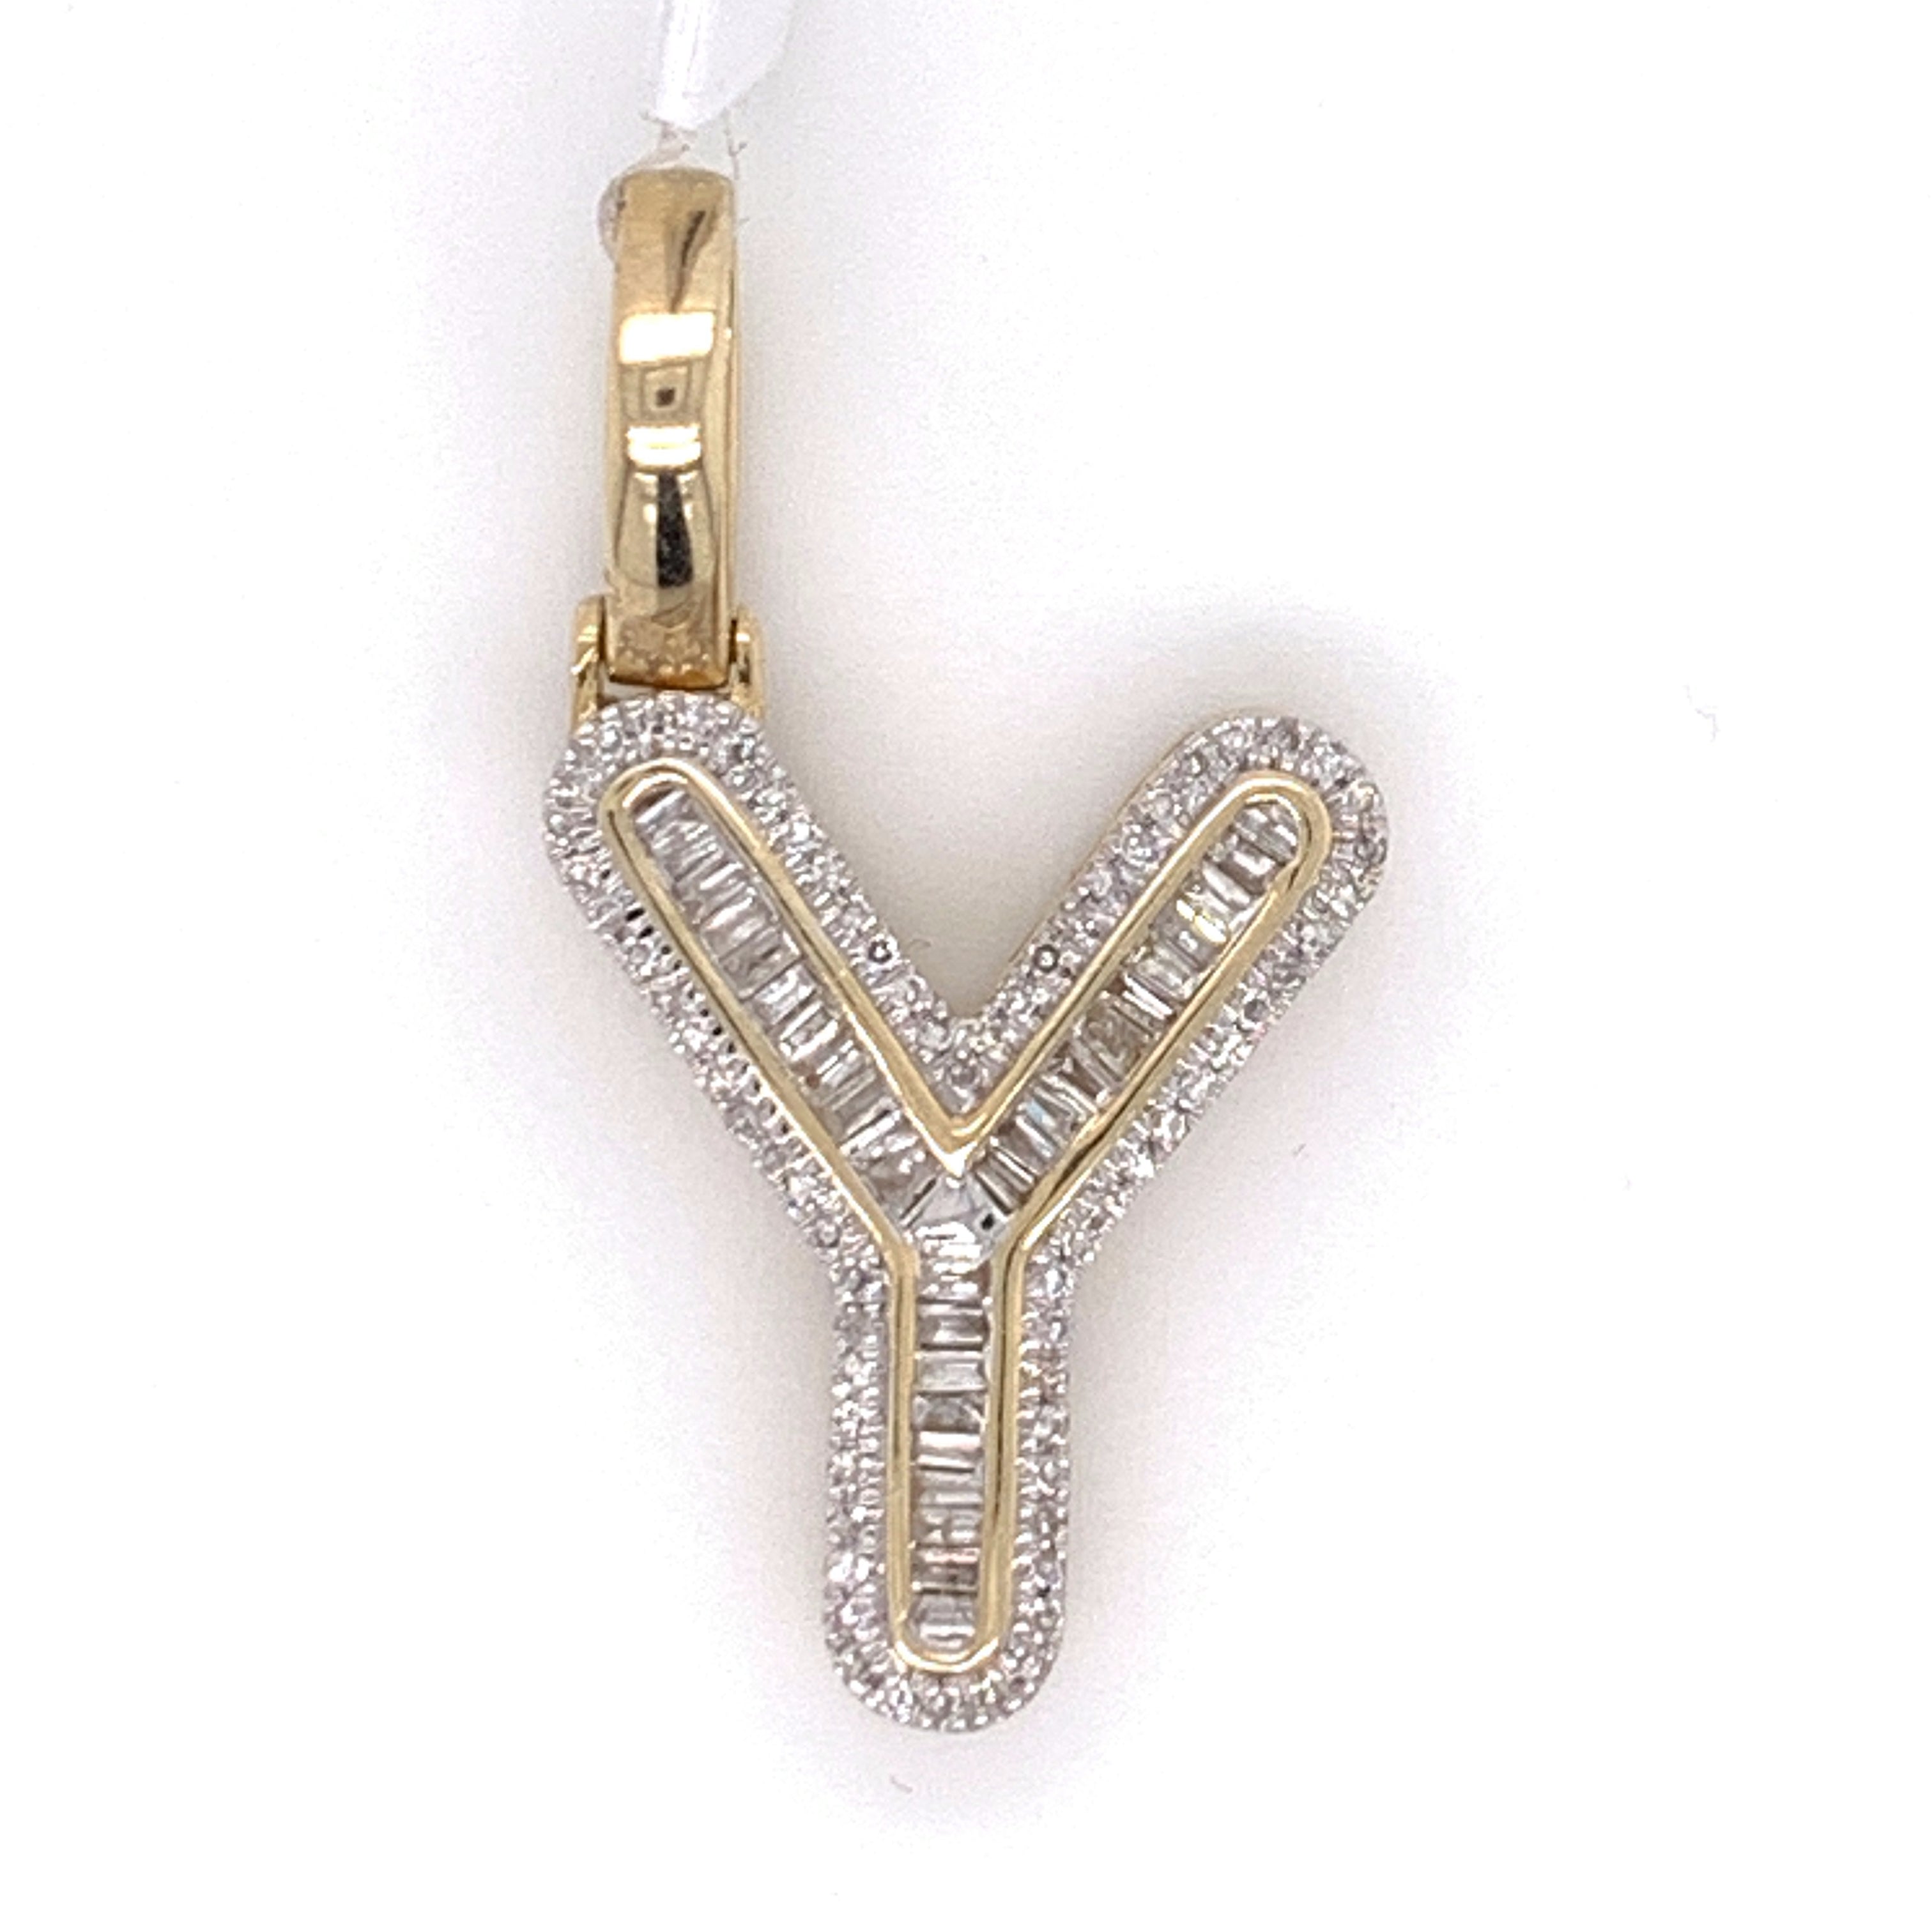 0.35 CT. Diamond Letter "Y" Pendant in 10K Gold - White Carat Diamonds 